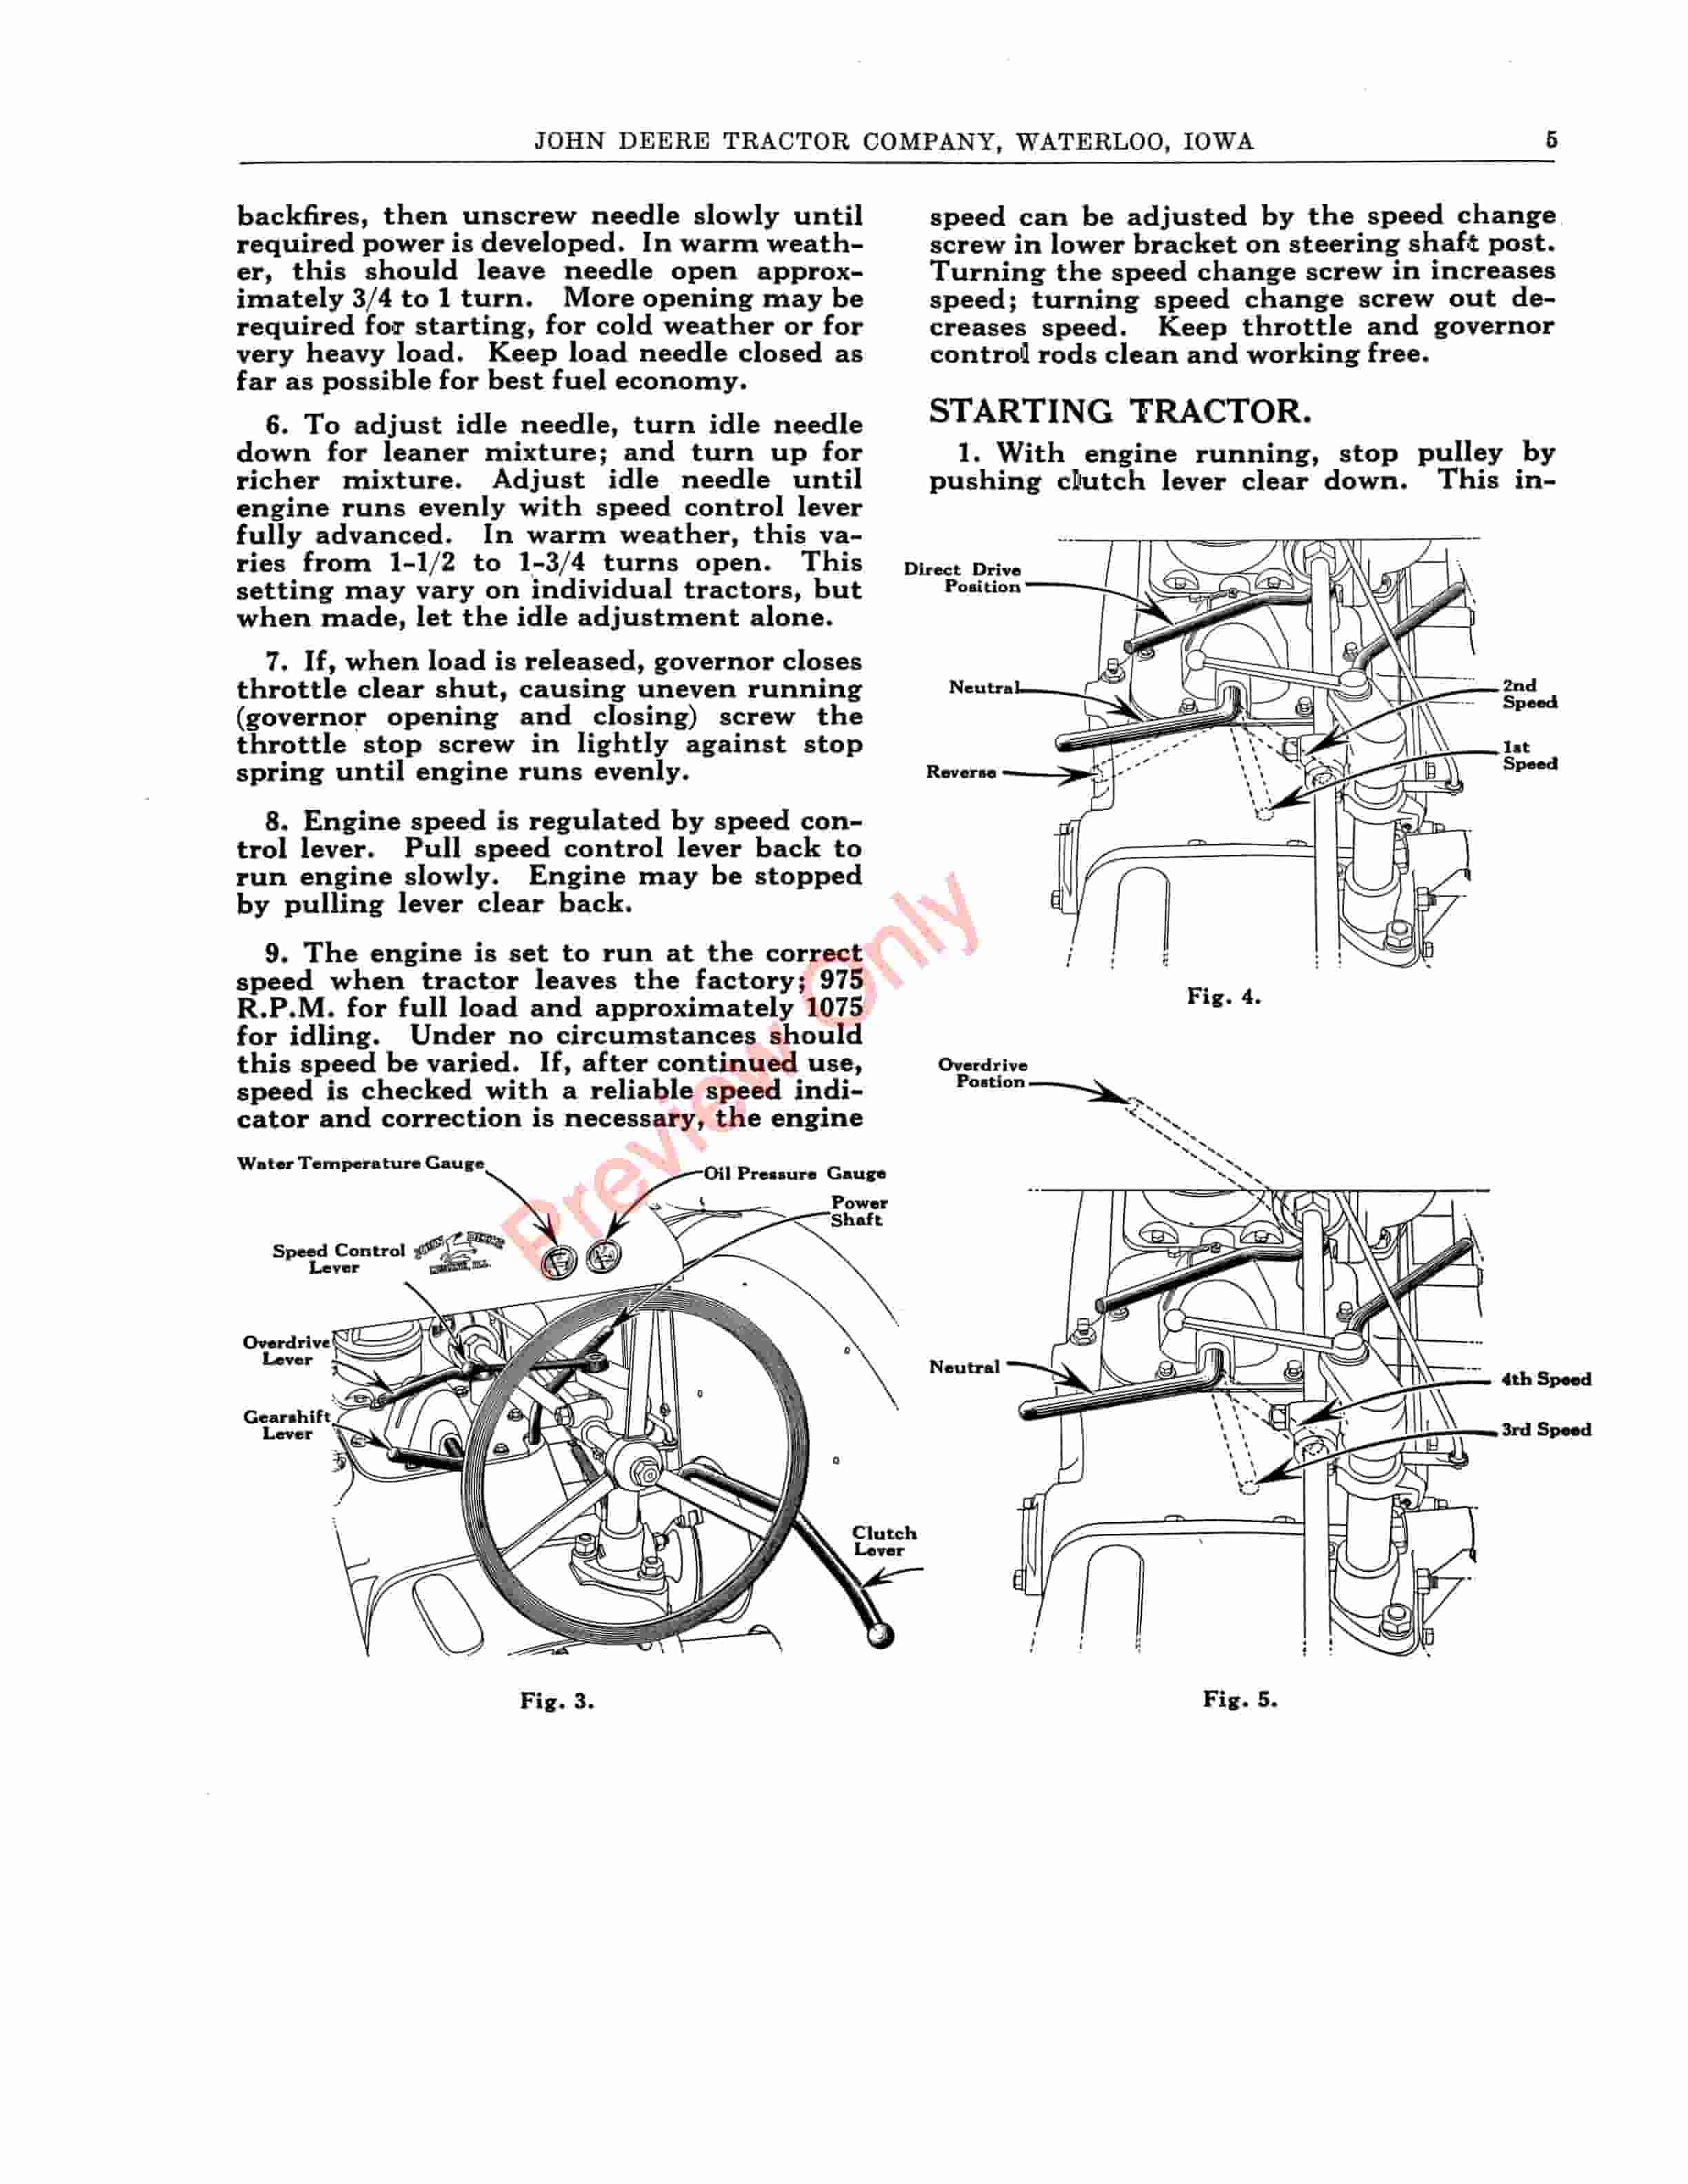 John Deere Model AO Tractor Parts Catalog Operation Manual Instructions And Parts List DIR162A 01AUG37 5